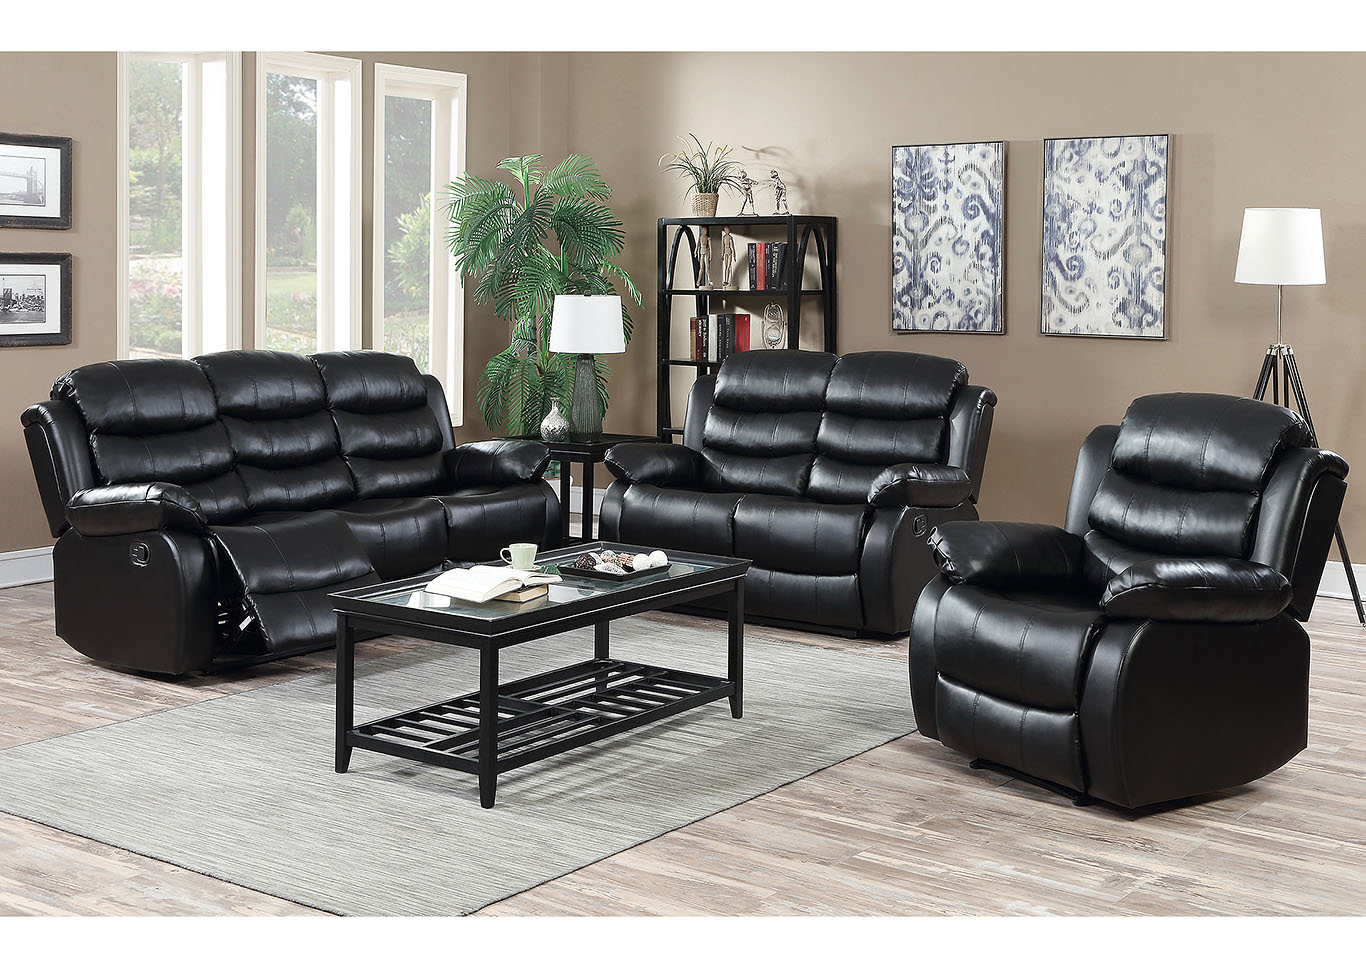 U9600 Black Faux Leather Reclining Sofa,Global Trading